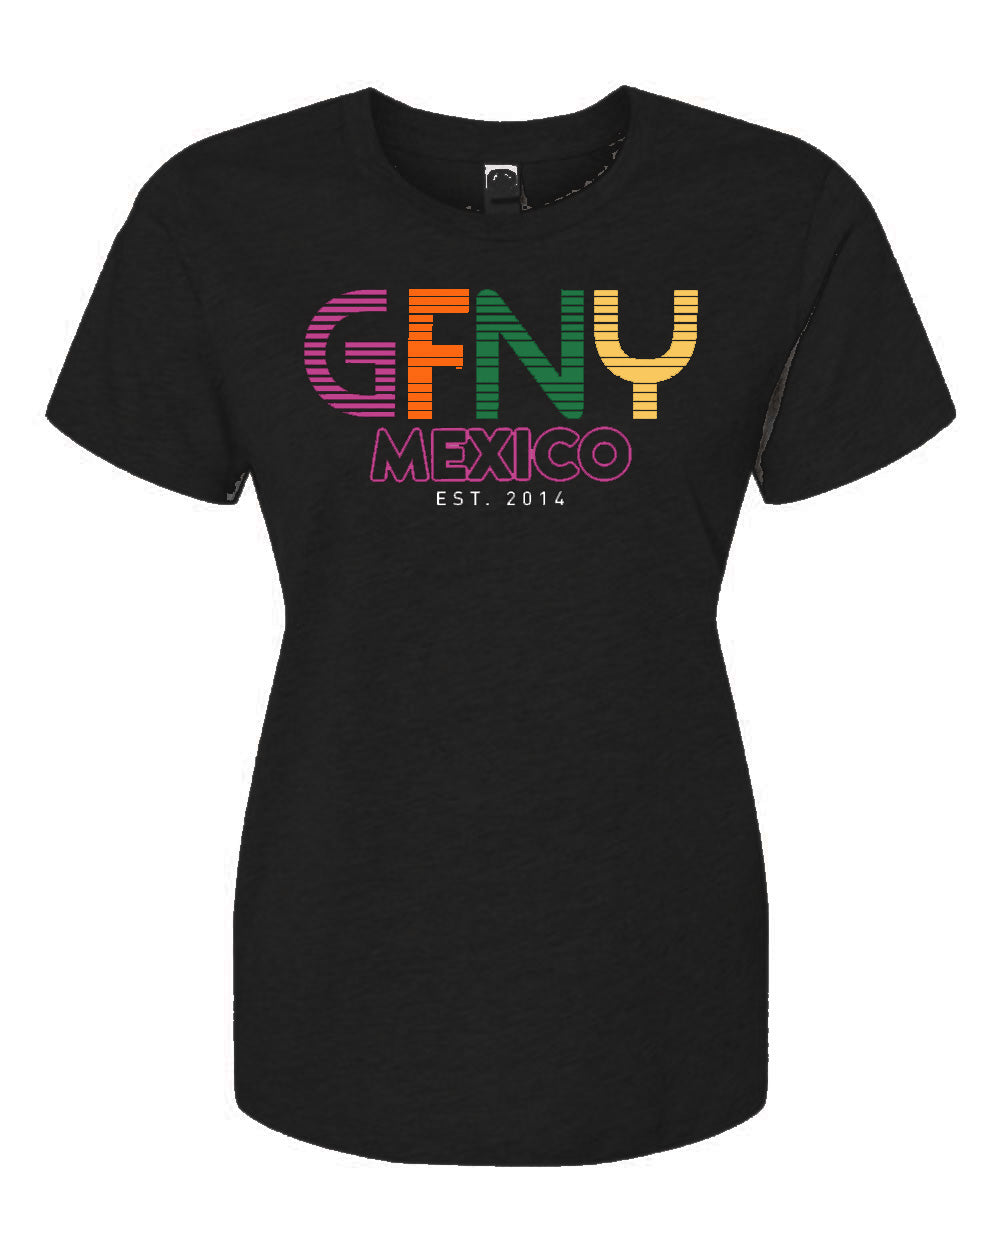 Woman Black T-shirt GFNY Mexico Est.